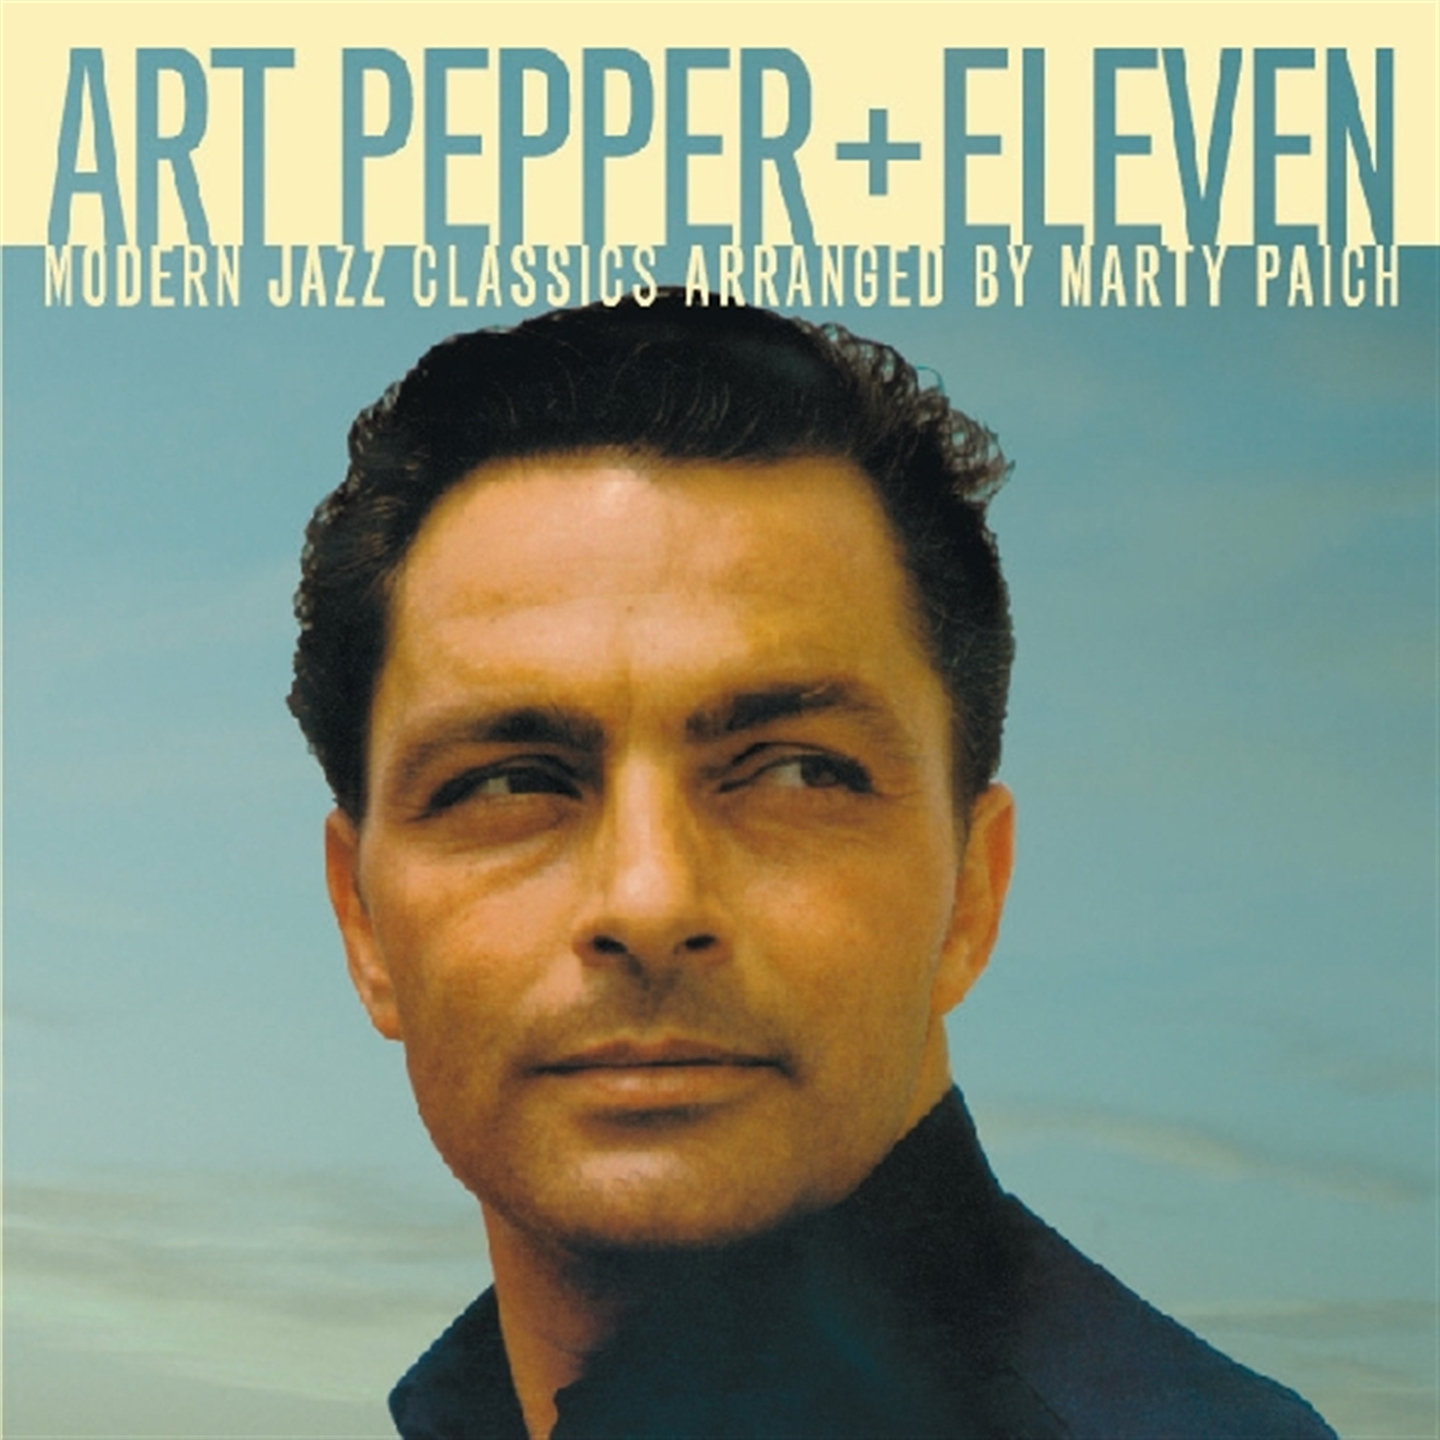 ART PEPPER + ELEVEN